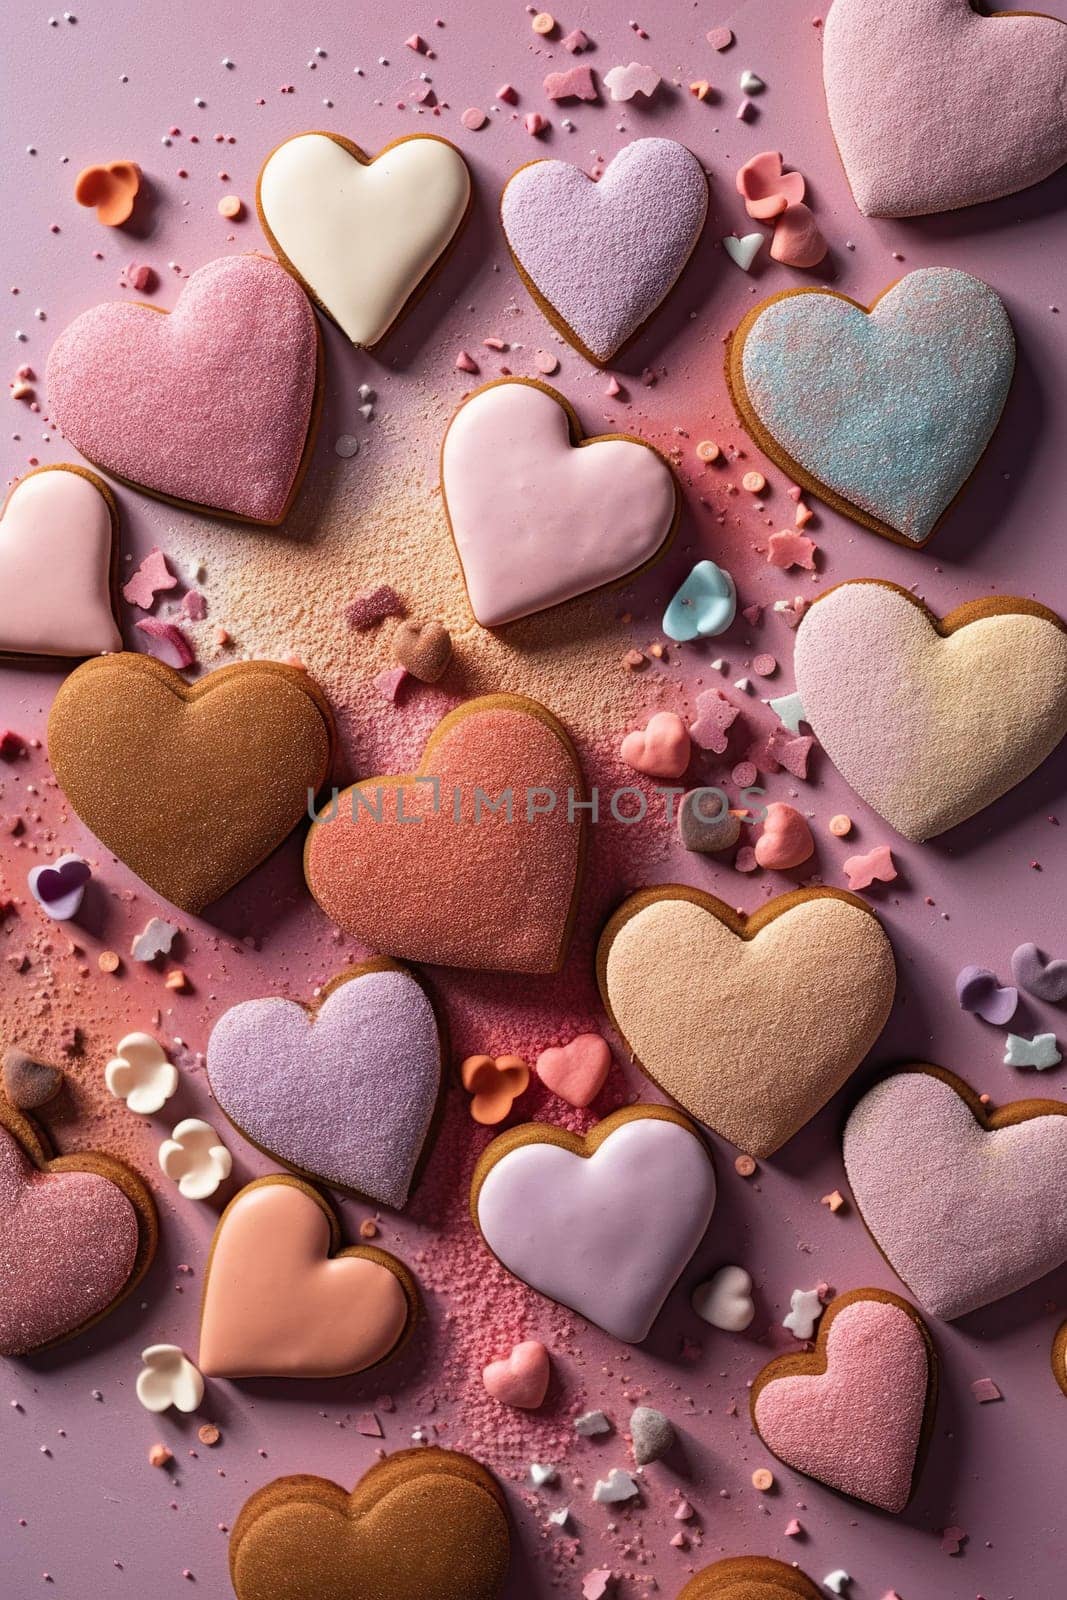 Gingerbreads In Heart Shape With Sweet Glaze In Pastel Colors by tan4ikk1